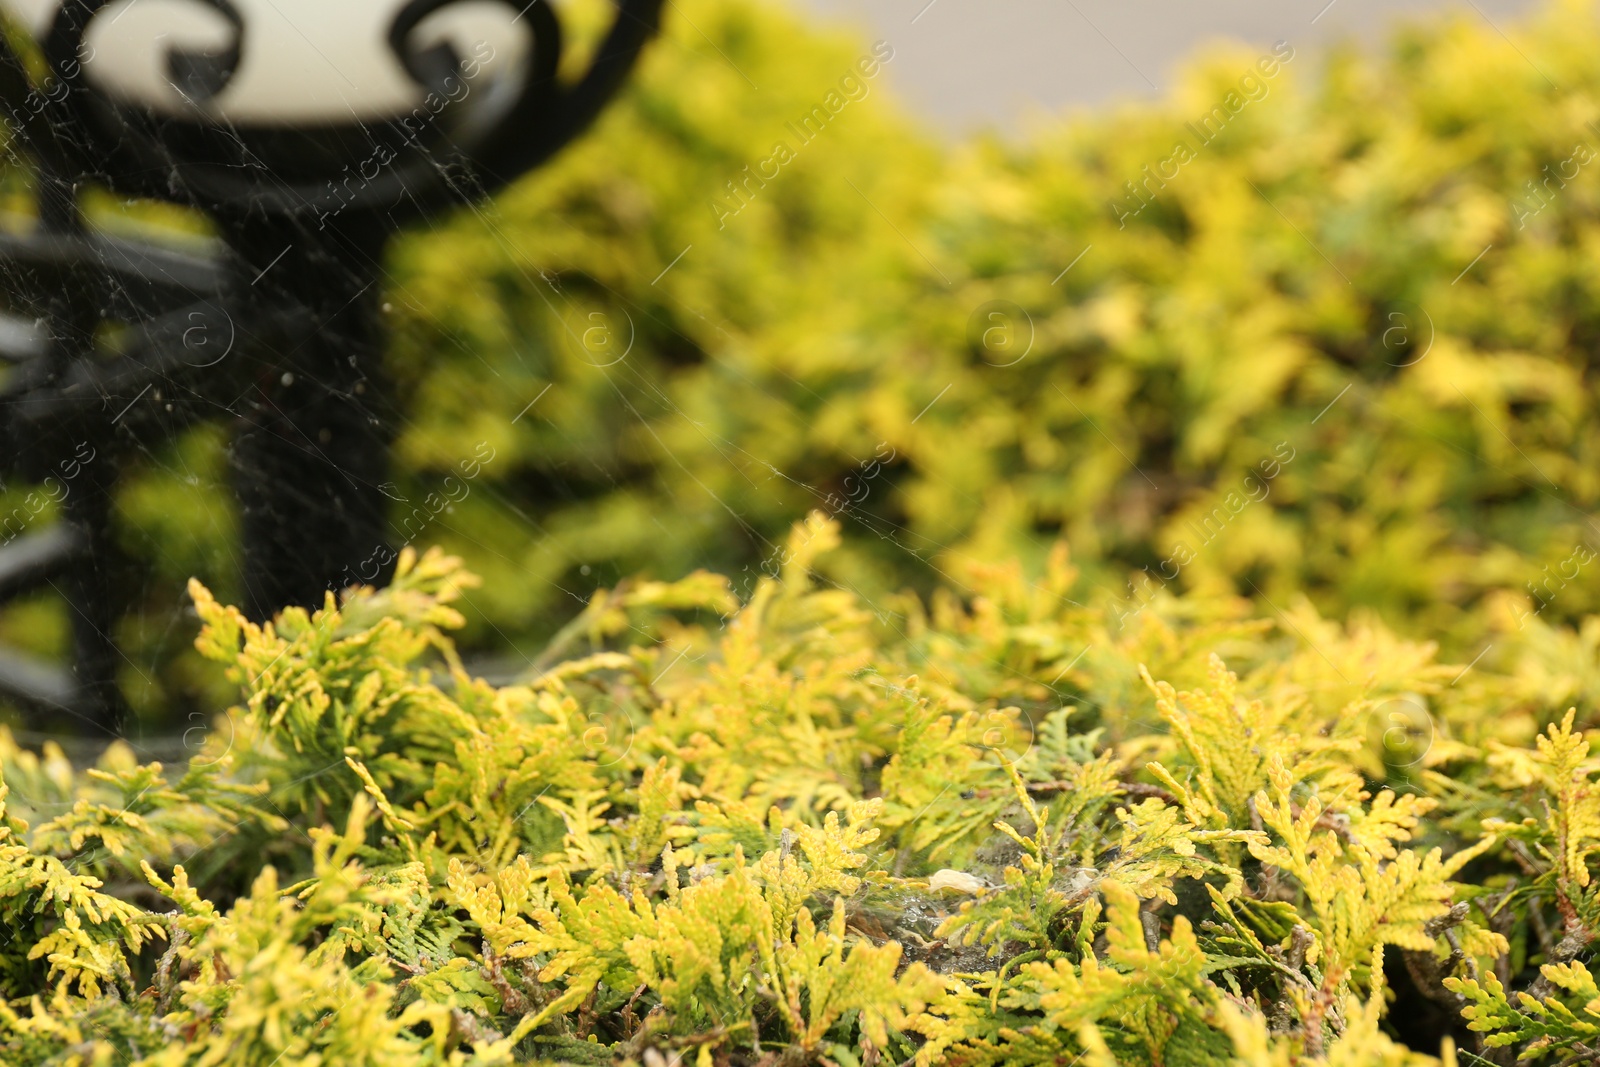 Photo of Cobweb on green thuja shrub outdoors, closeup